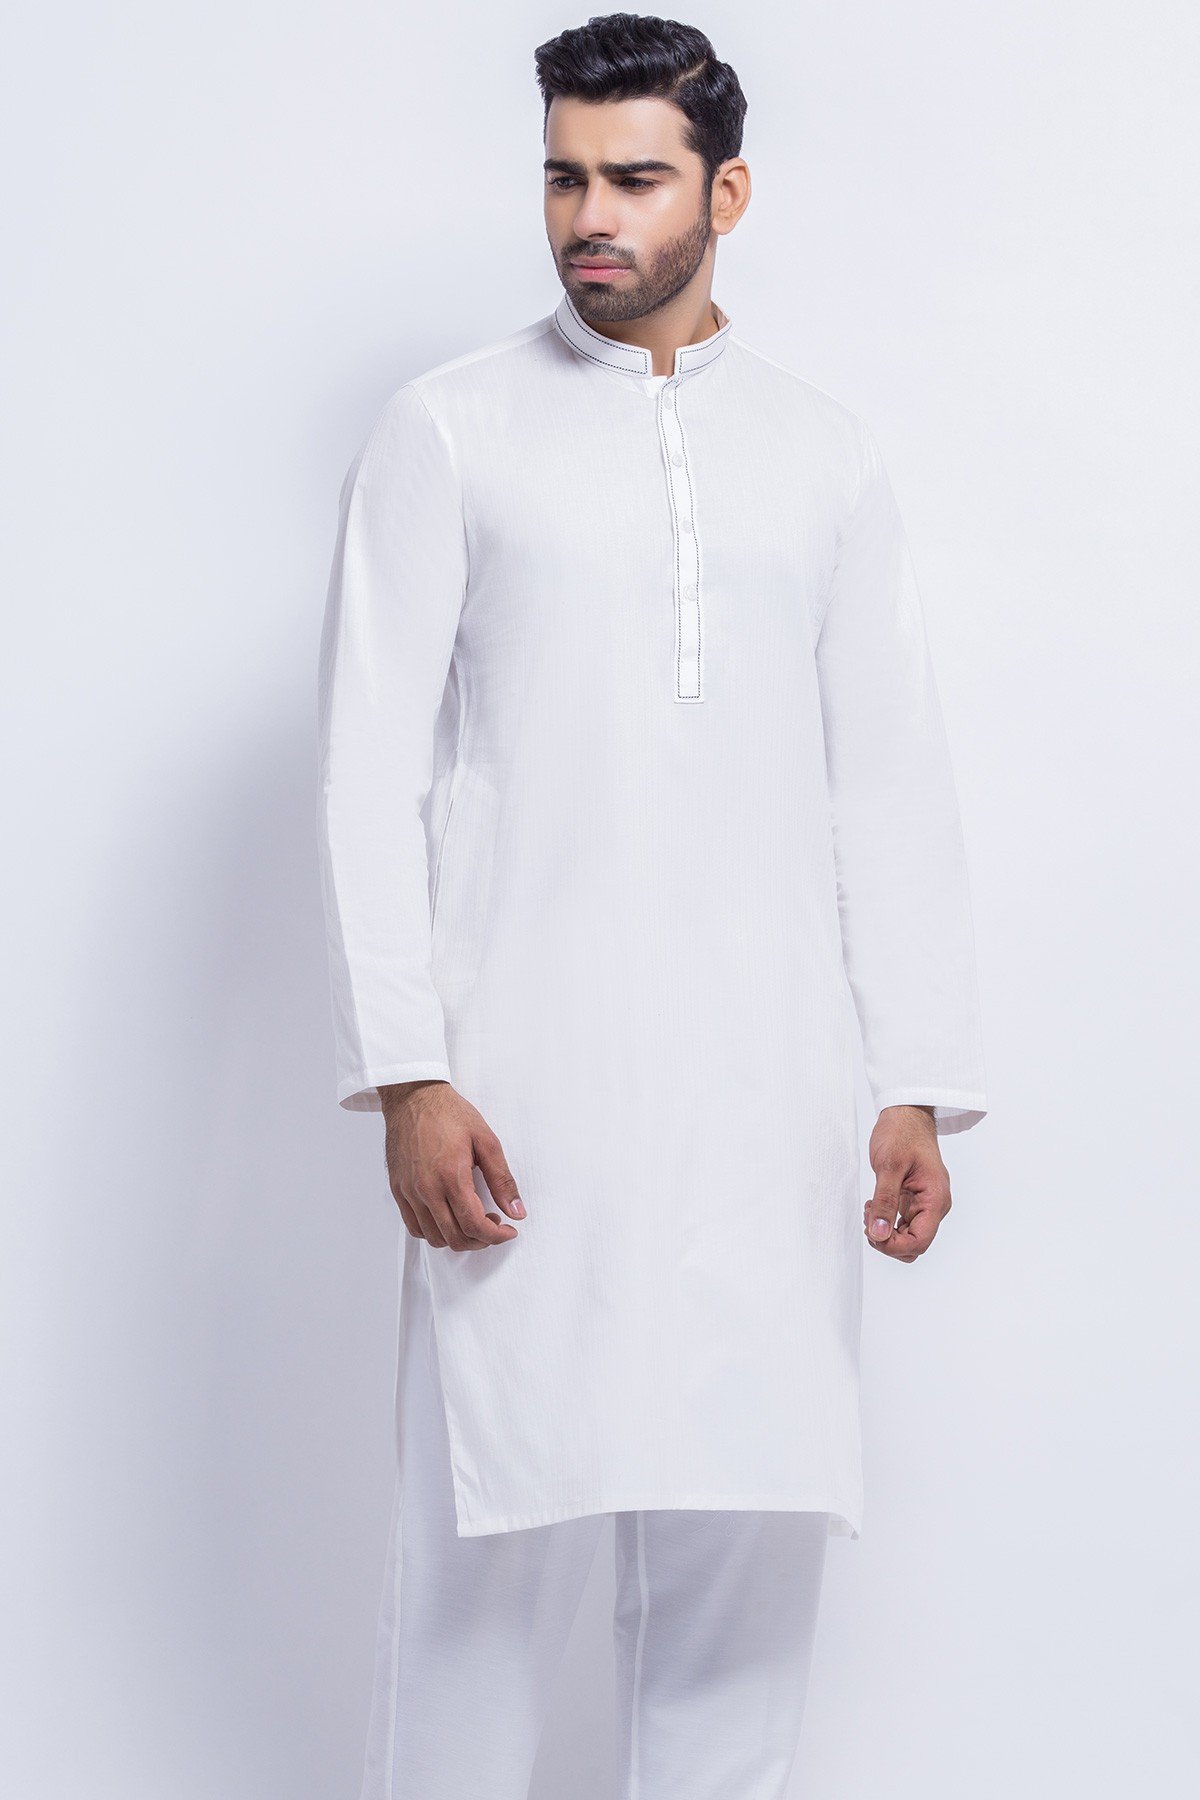 Alkaram Men's Wear Eid Collection